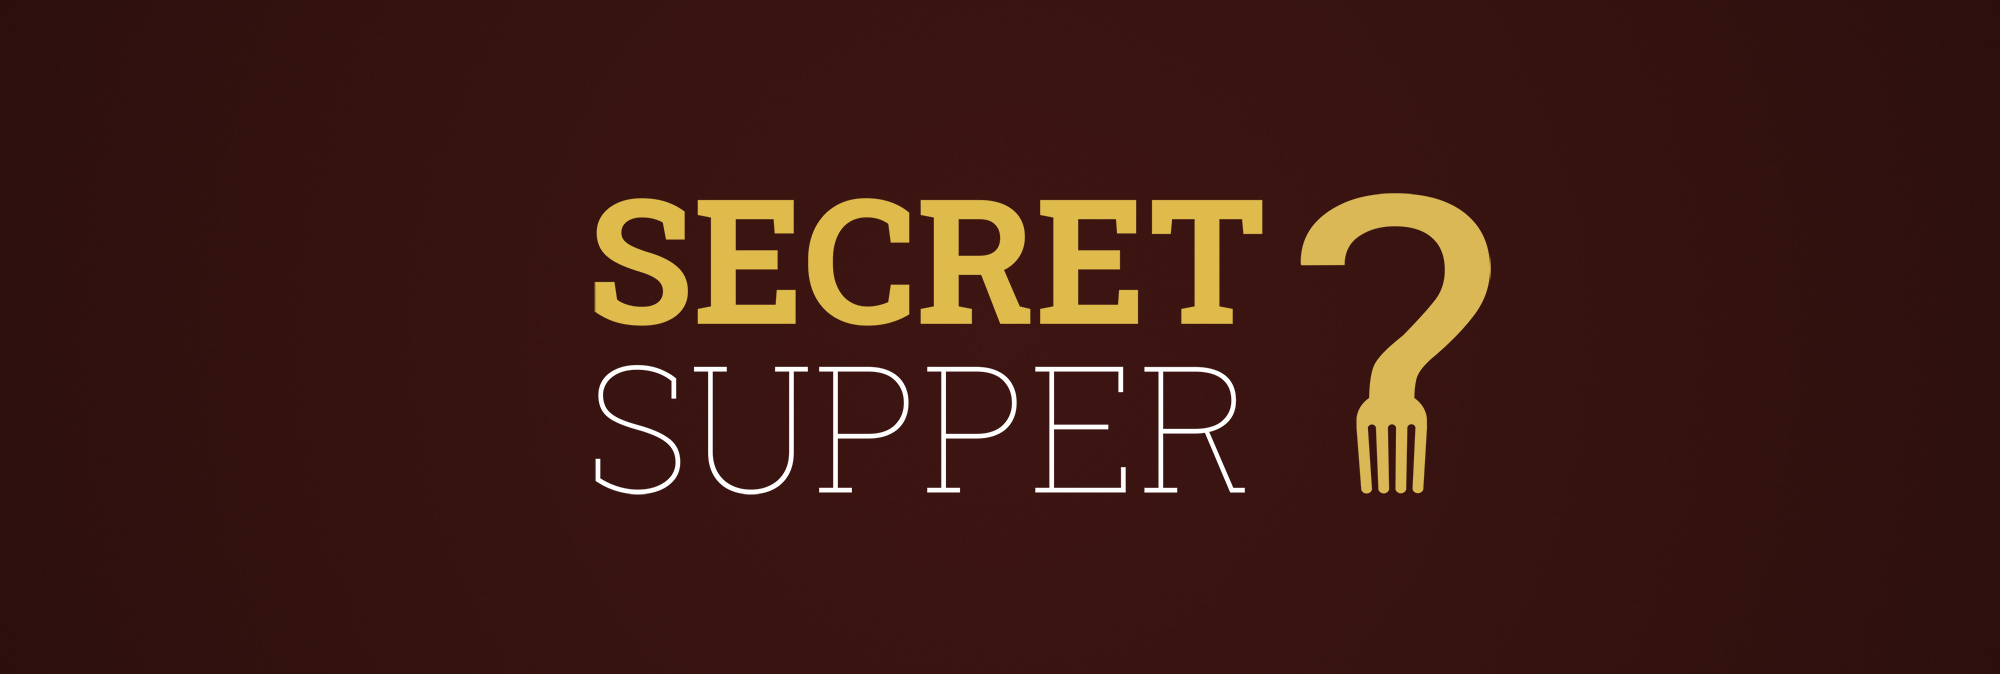 Featured image for “Shrewsbury Secret Supper Autumn Edition 2022”